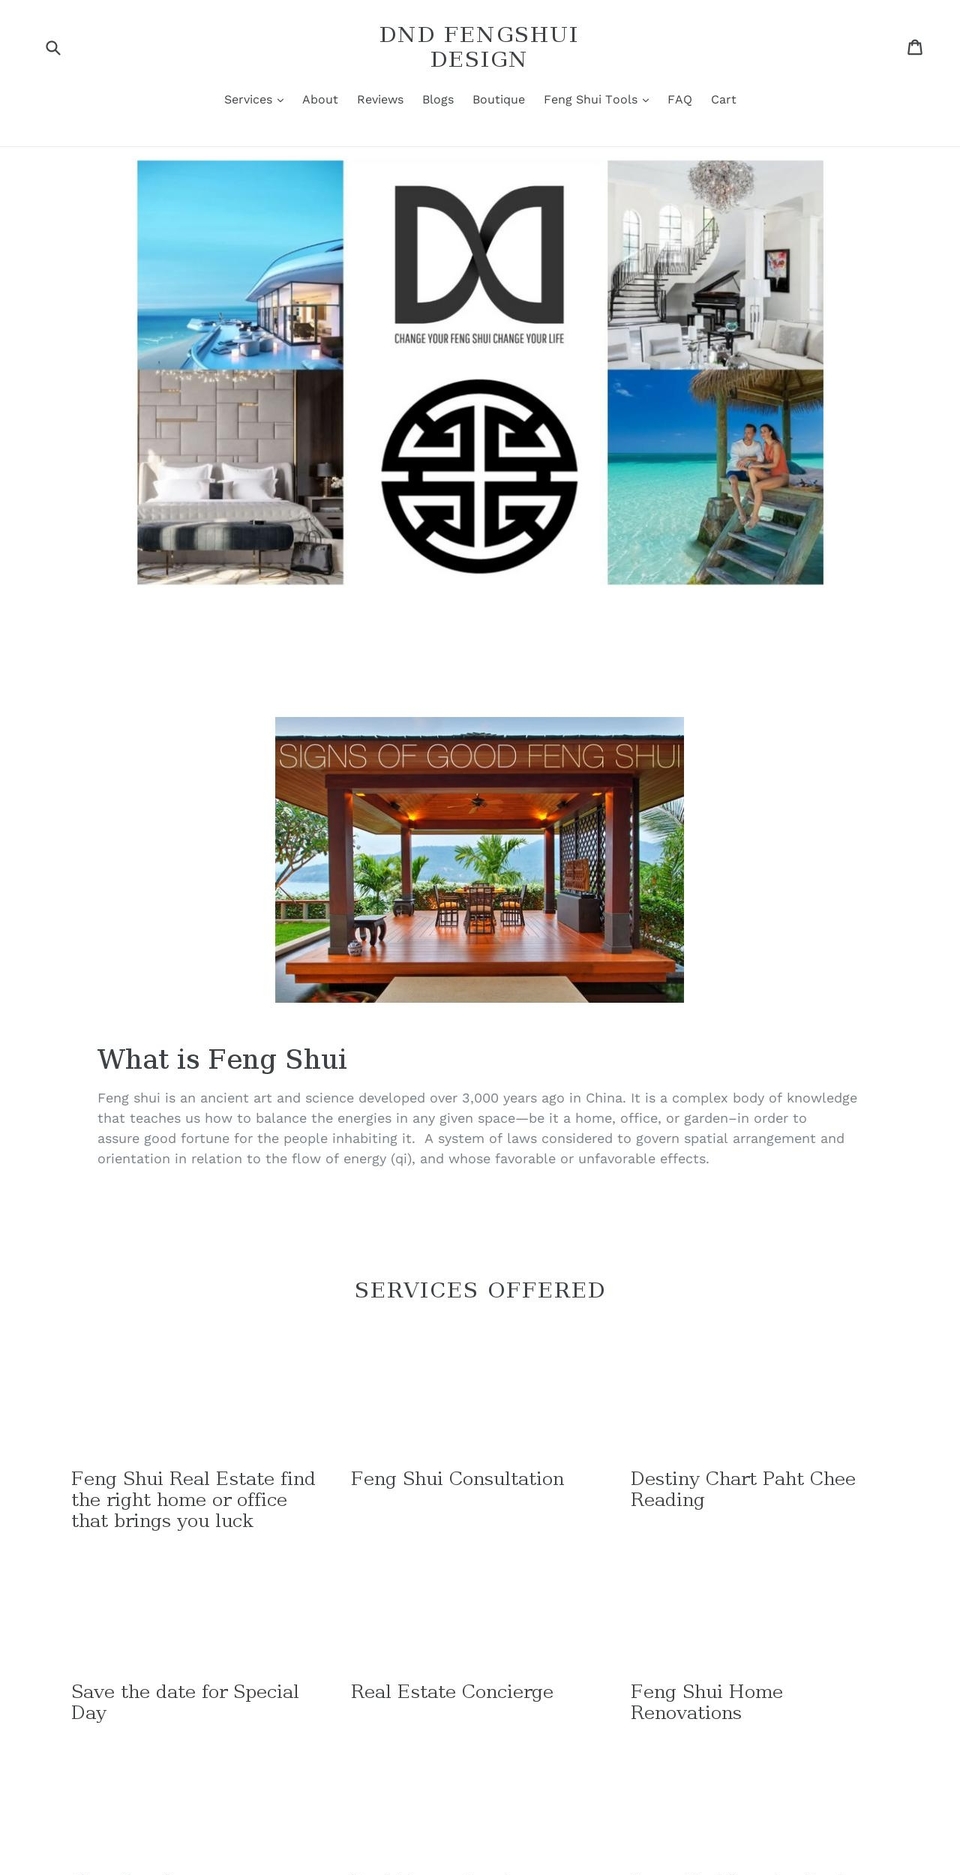 dndfengshui.com shopify website screenshot